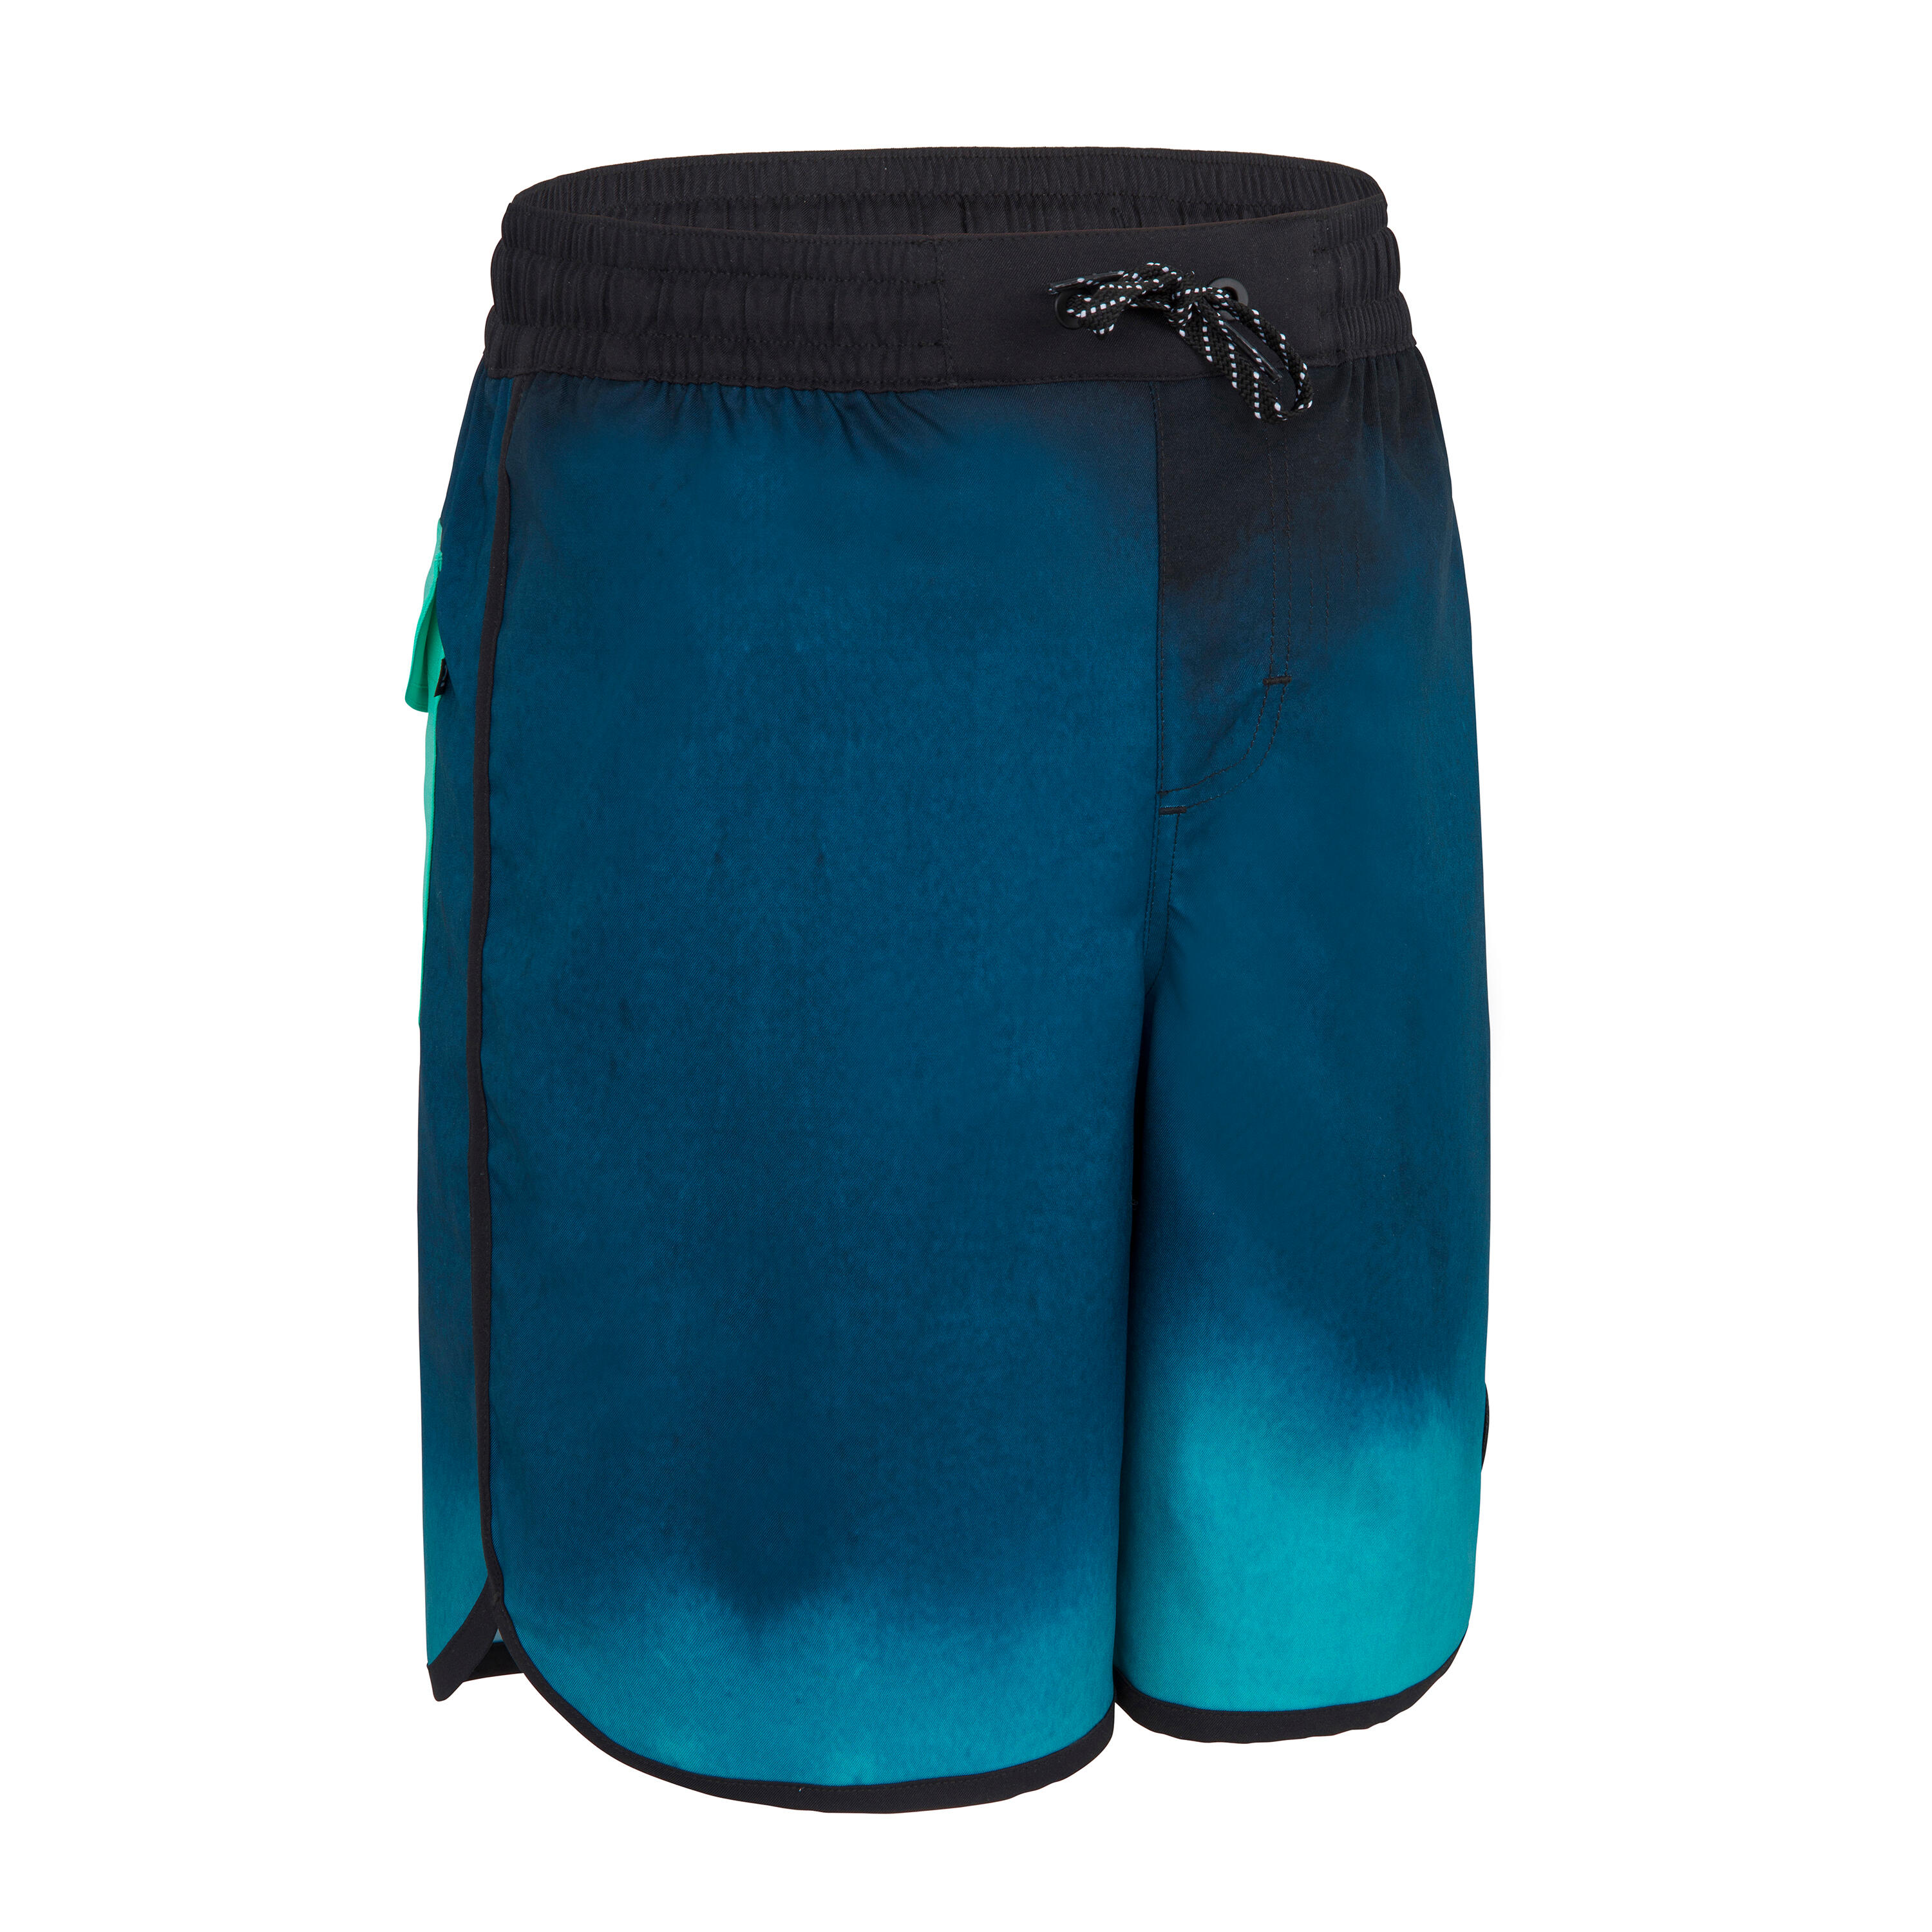 OLAIAN Boardshorts 500 blau/schwarz Gr. 140 - 10 Jahre